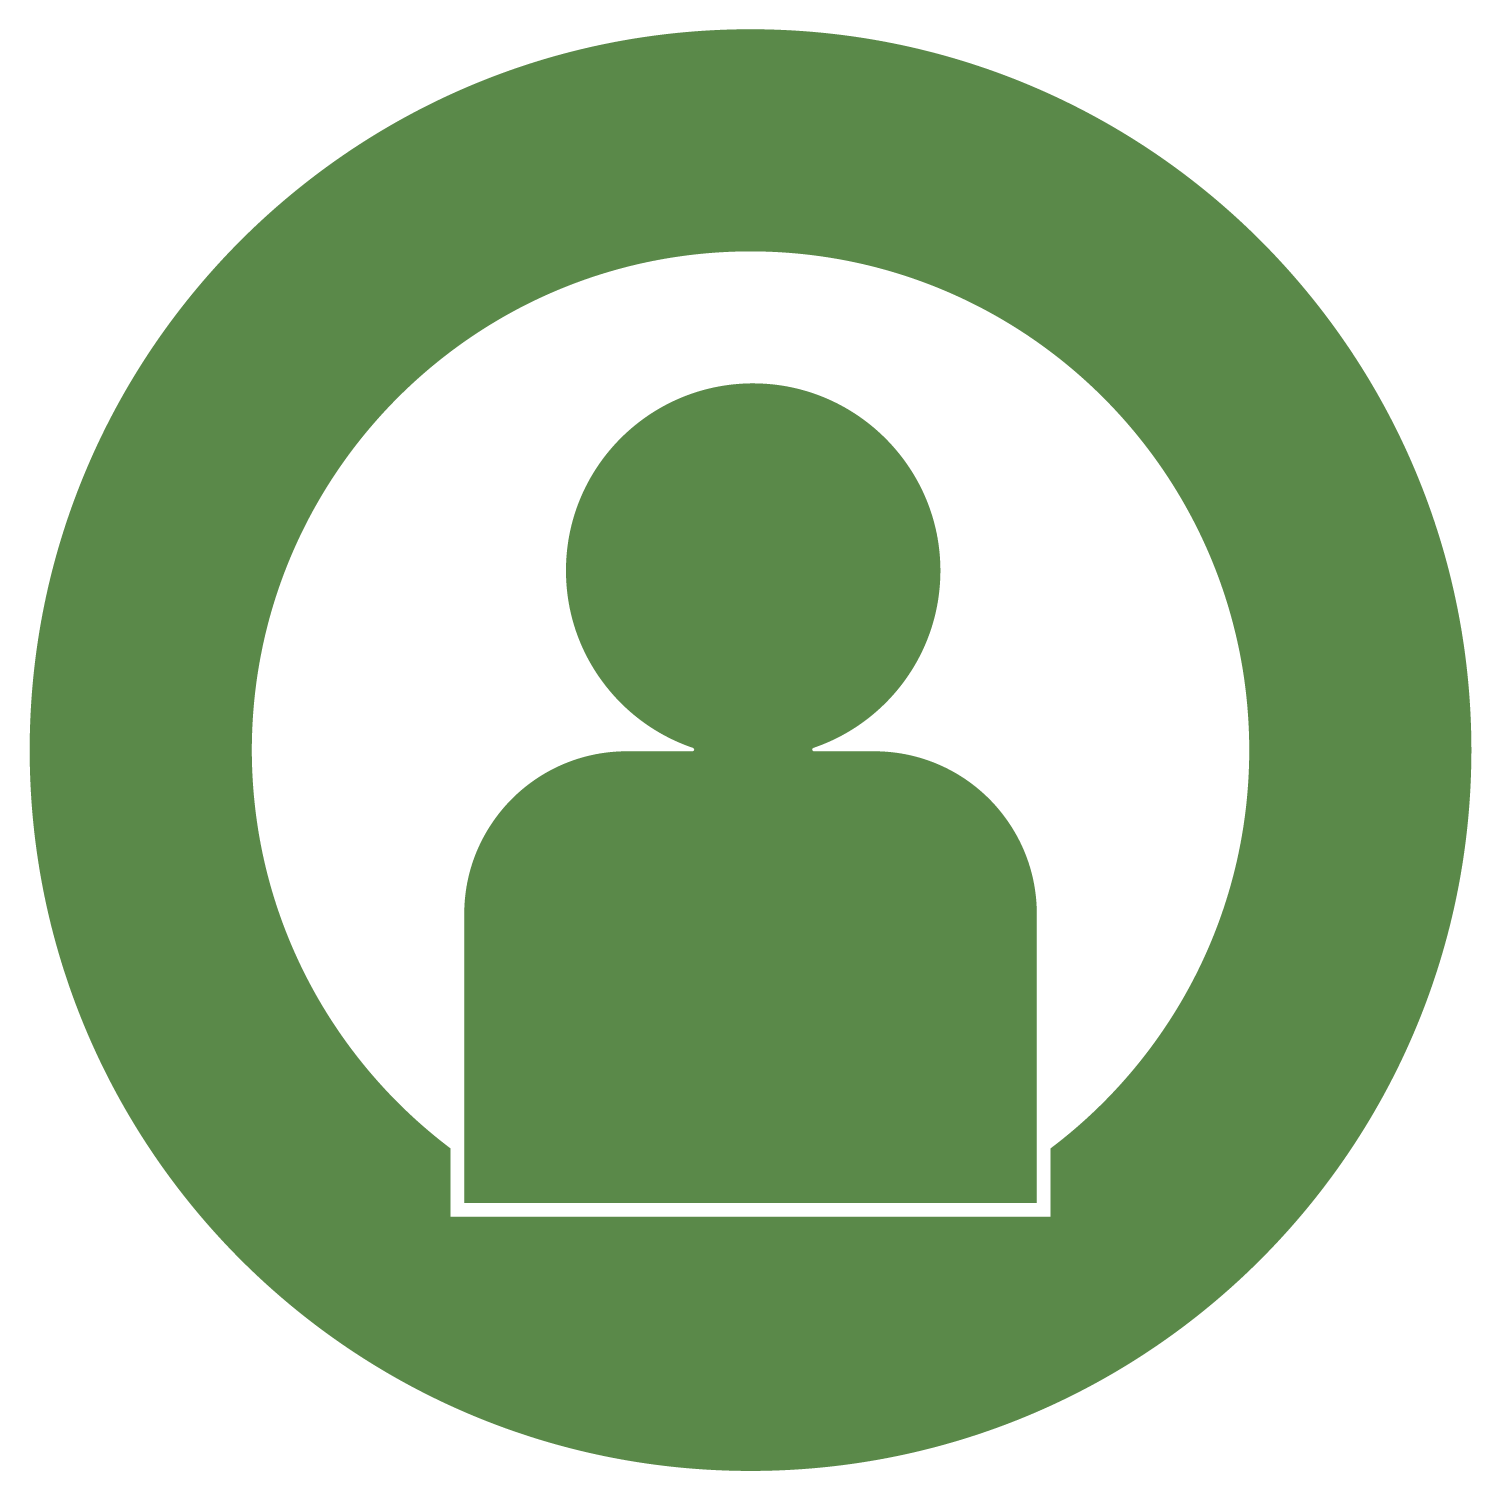  Green circle person icon